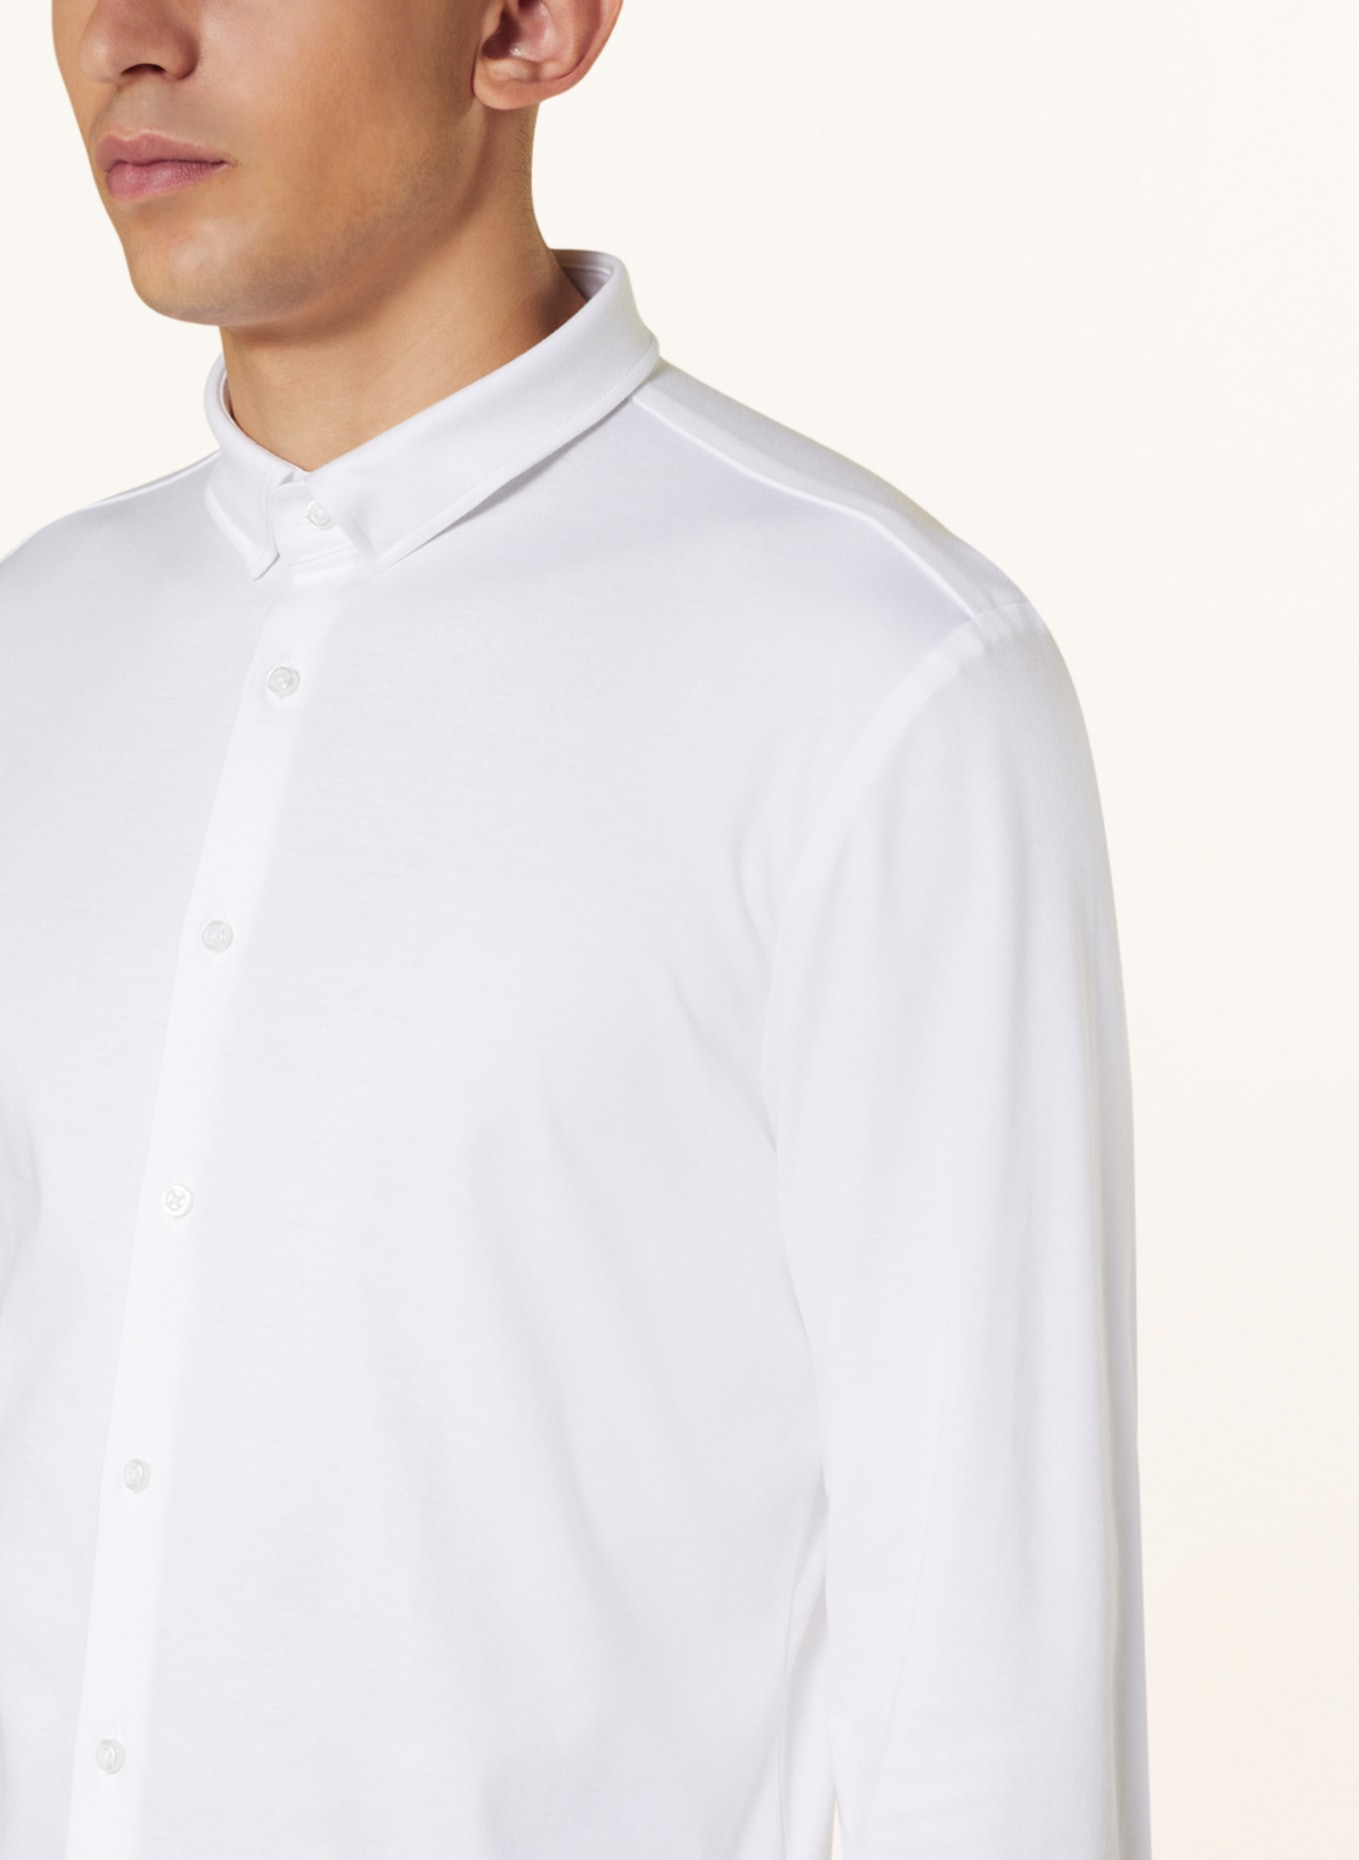 Q1 Manufaktur Jersey shirt extra slim fit, Color: WHITE (Image 4)